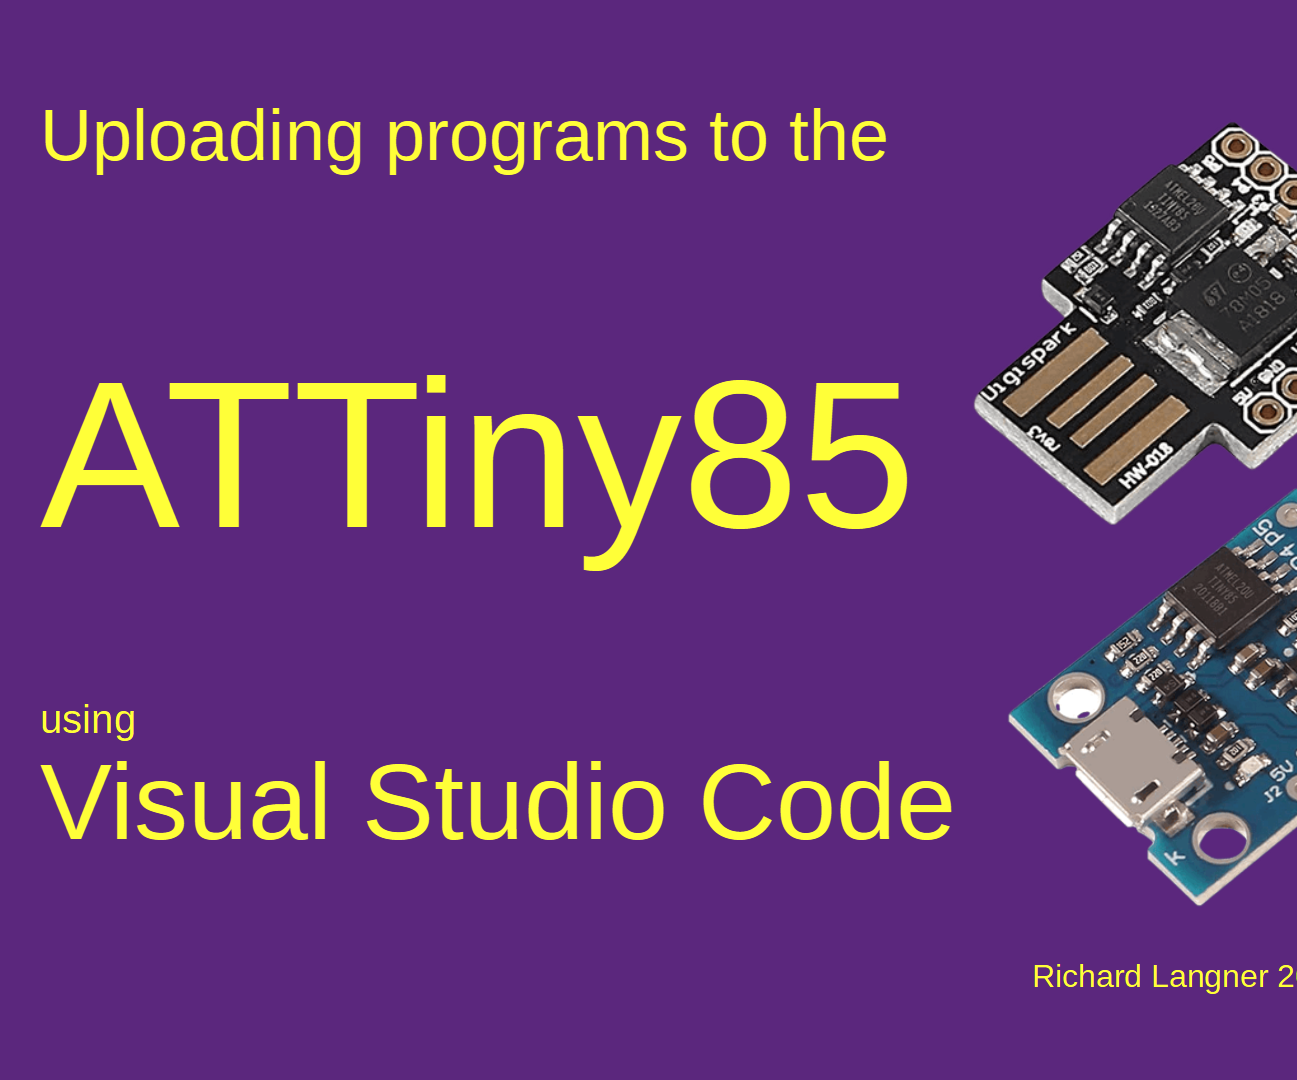 ATTiny85 - How to Program With Visual Studio Code (VSC) and PlatformIO